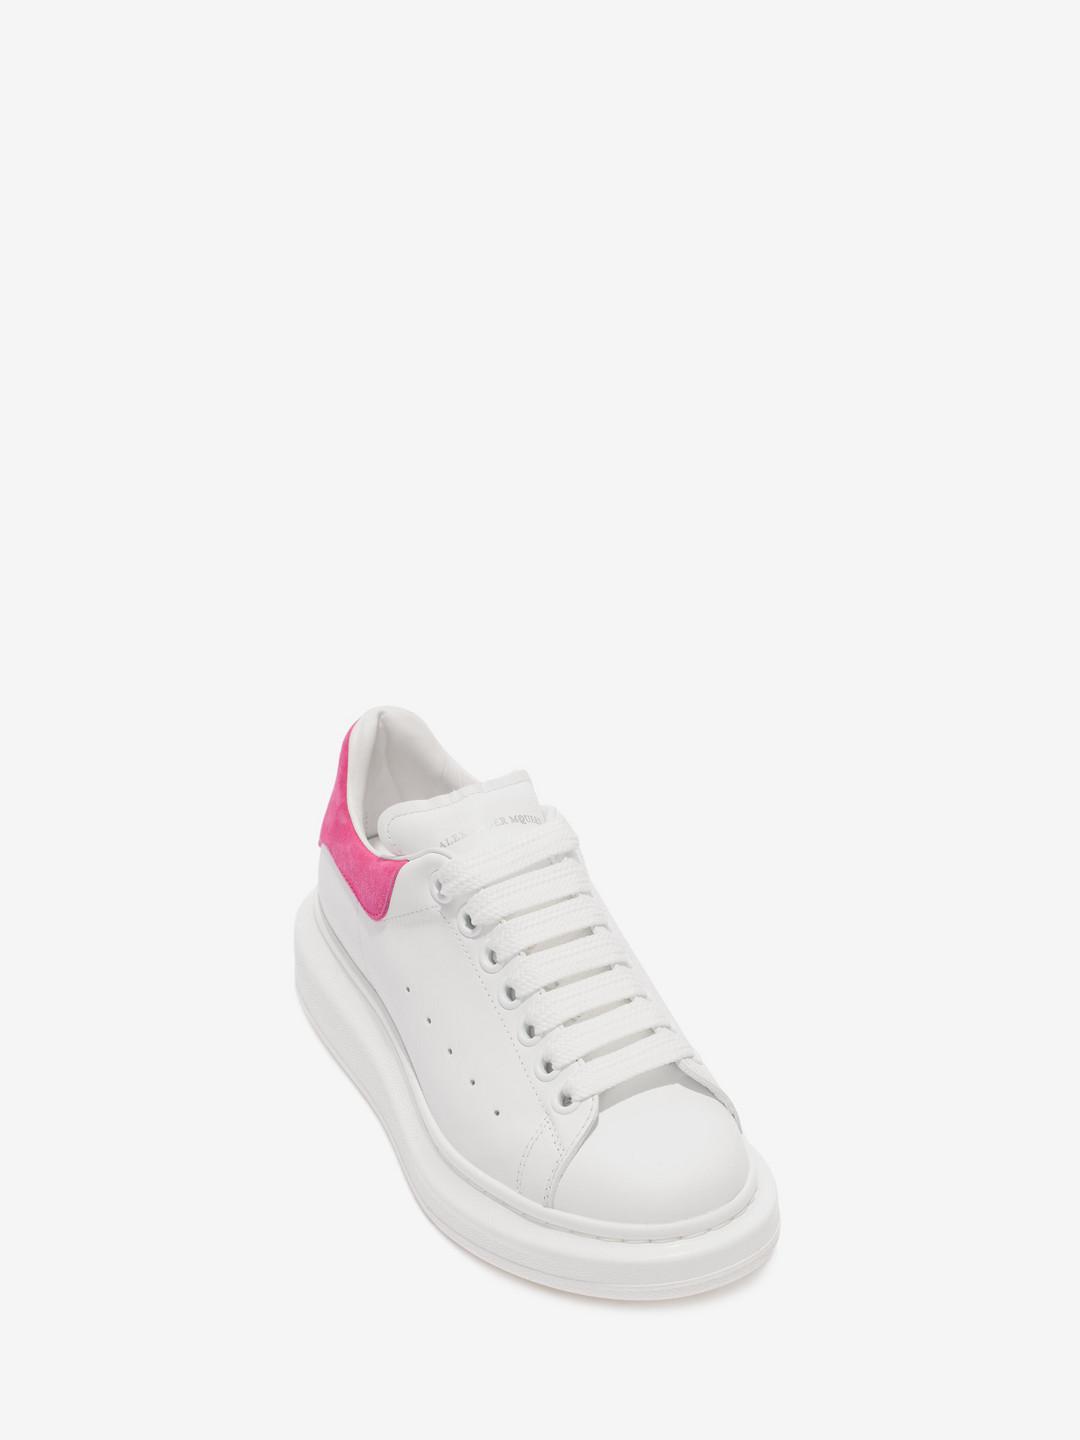 Alexander McQueen Leather Oversized Sneaker in Bright Pink (Pink) - Lyst